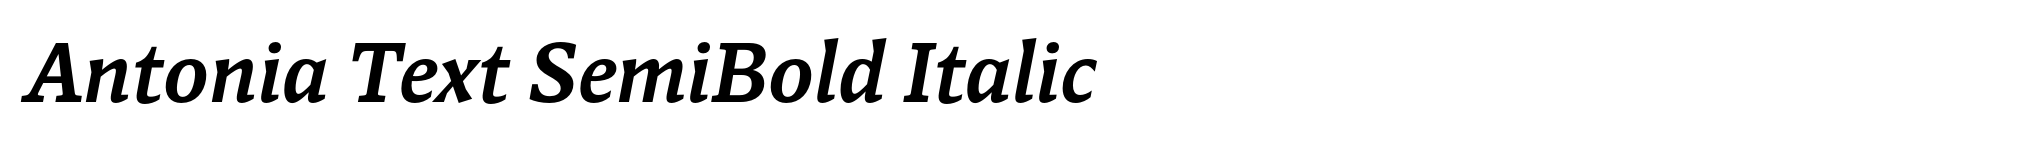 Antonia Text SemiBold Italic image